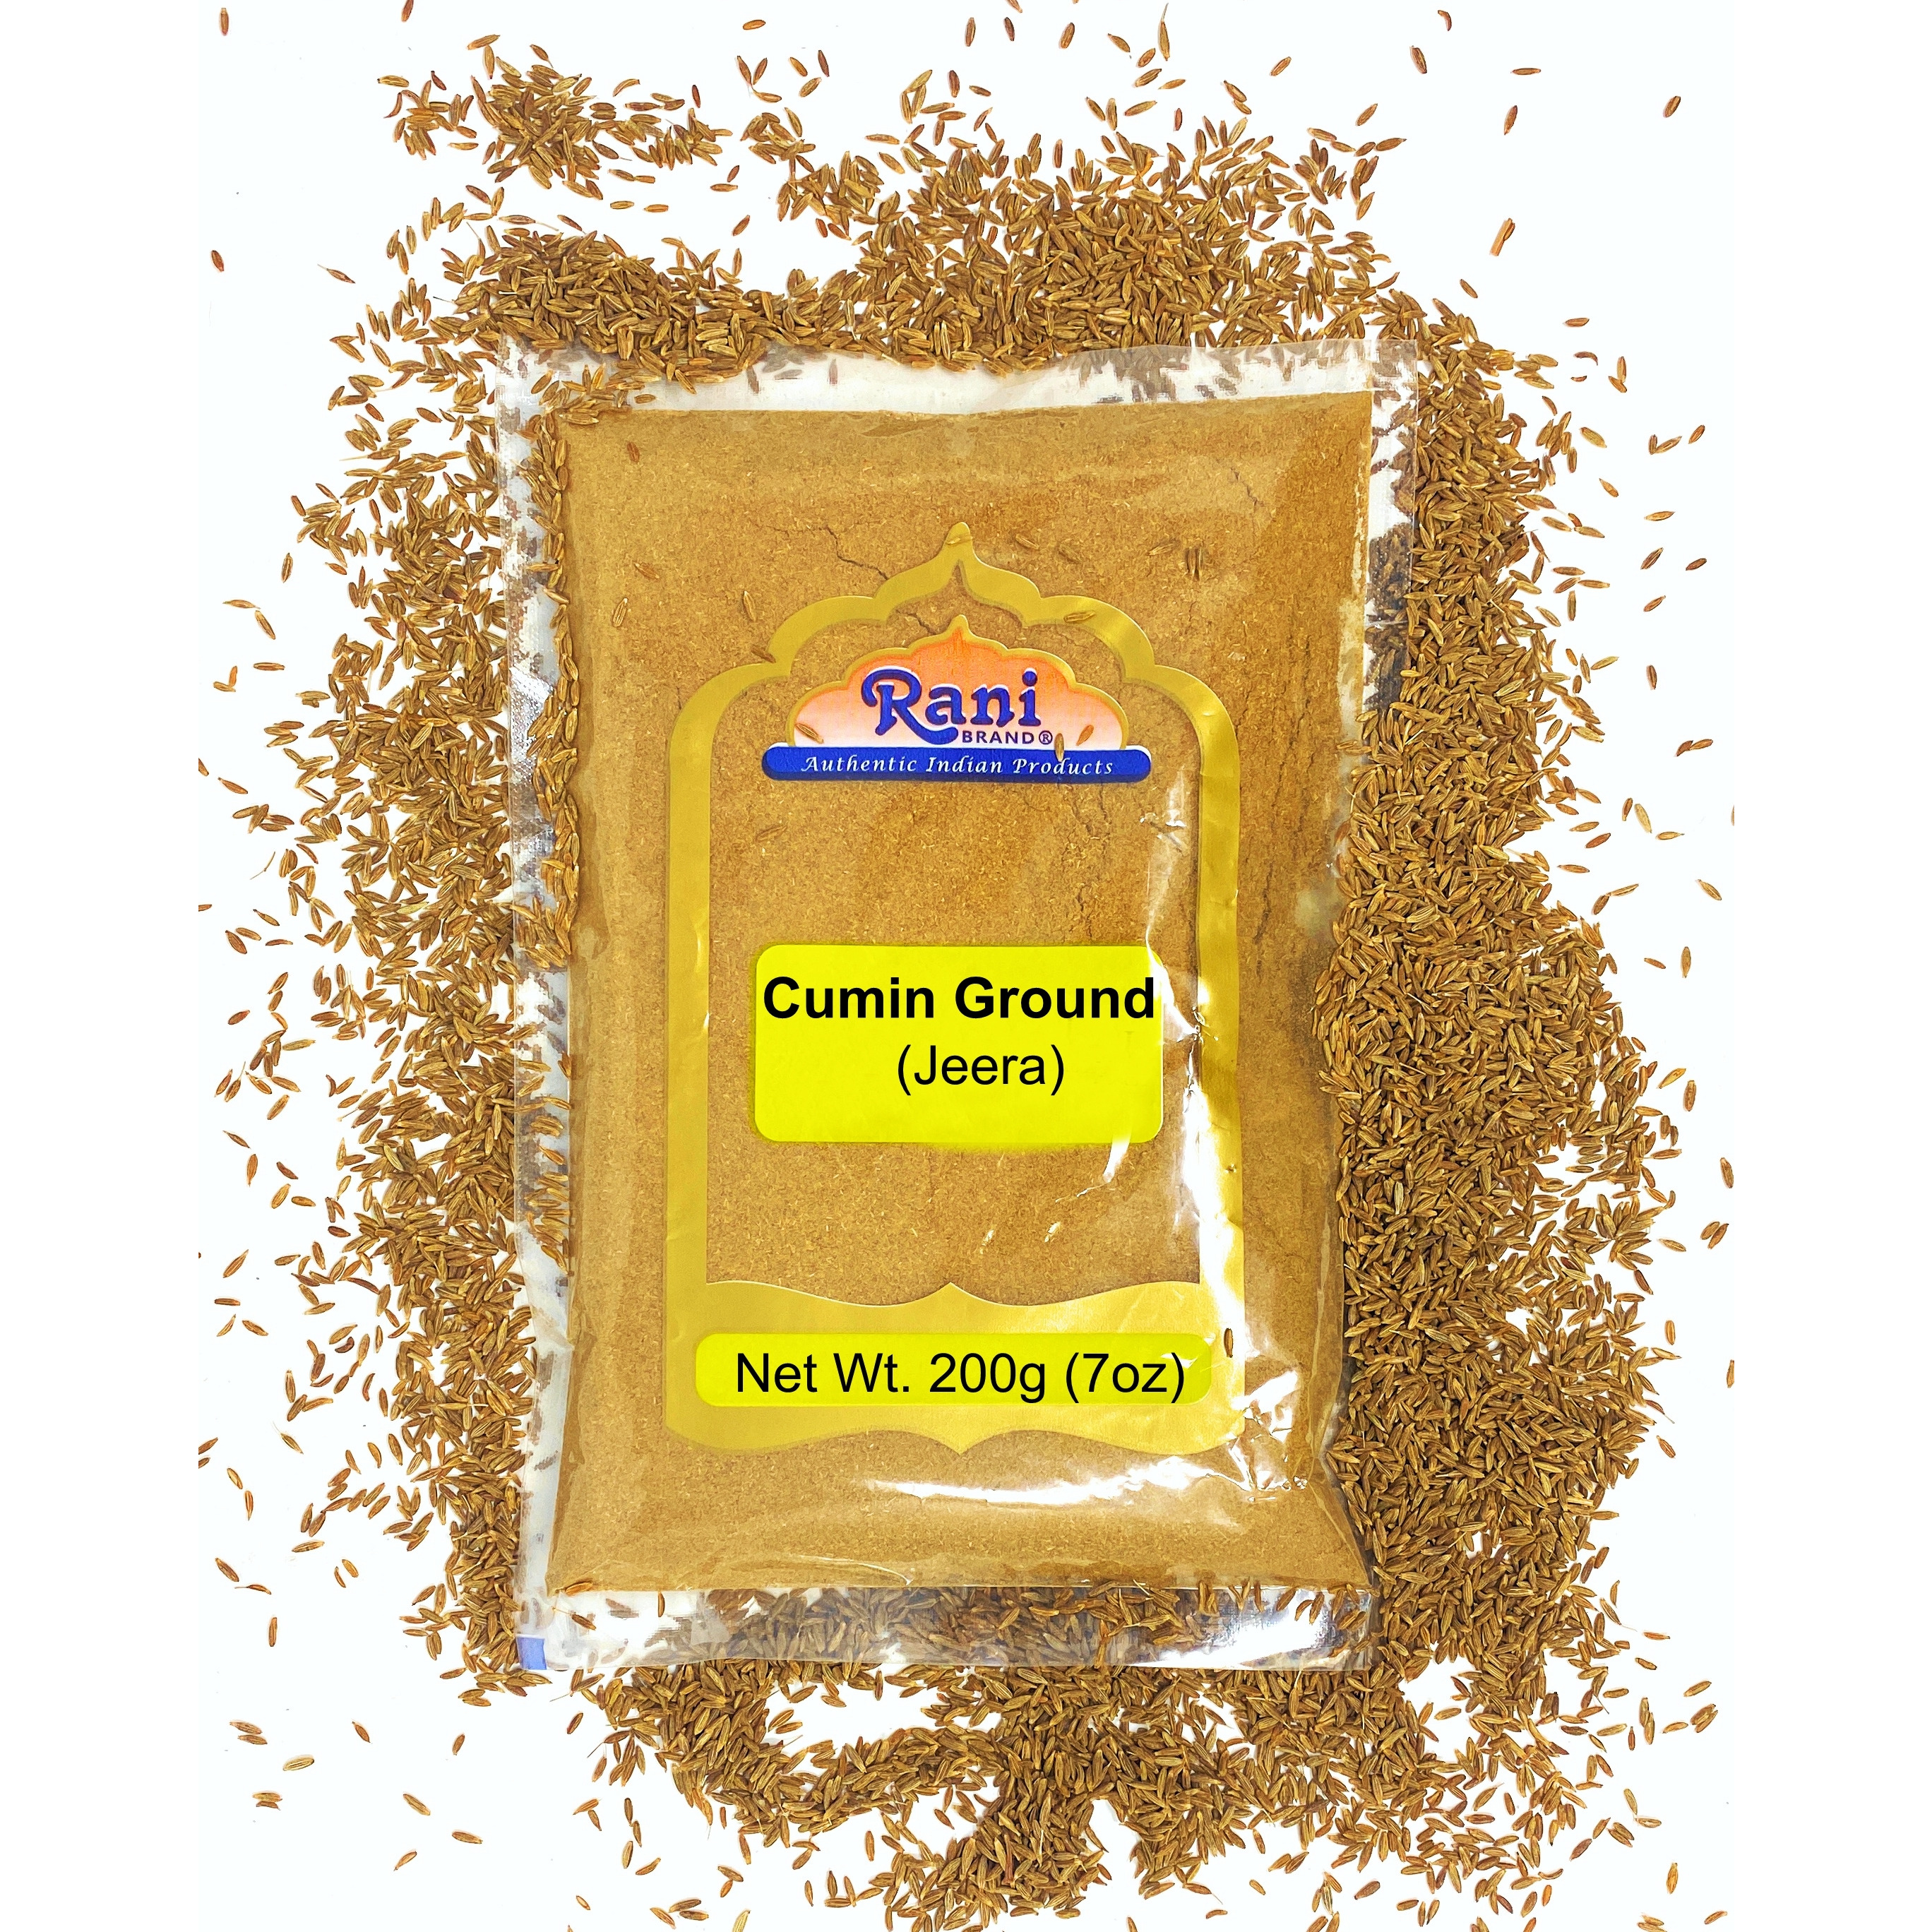 Rani Cumin (Jeera) Powder Spice 200g (7oz) ~ All Natural | Vegan | Gluten Free Ingredients | NON-GMO | Indian Origin